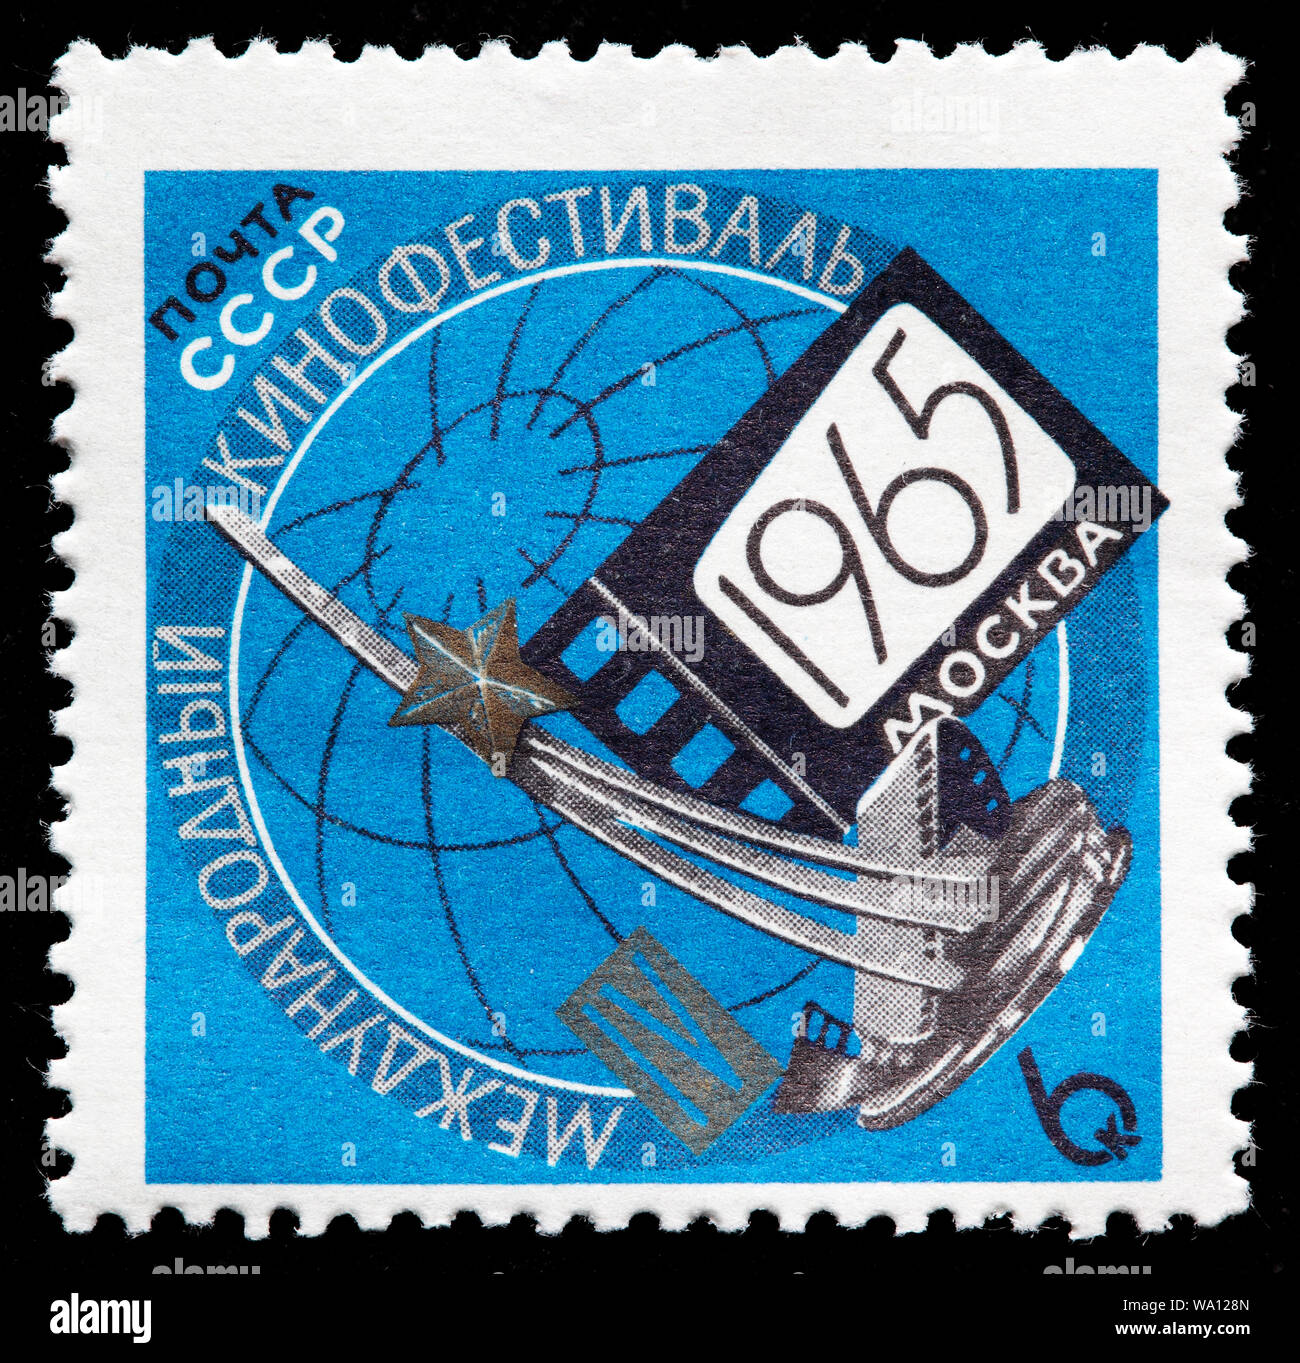 IV Festival Internacional de Cine de Moscú, sello, Rusia, URSS, 1965 Foto de stock